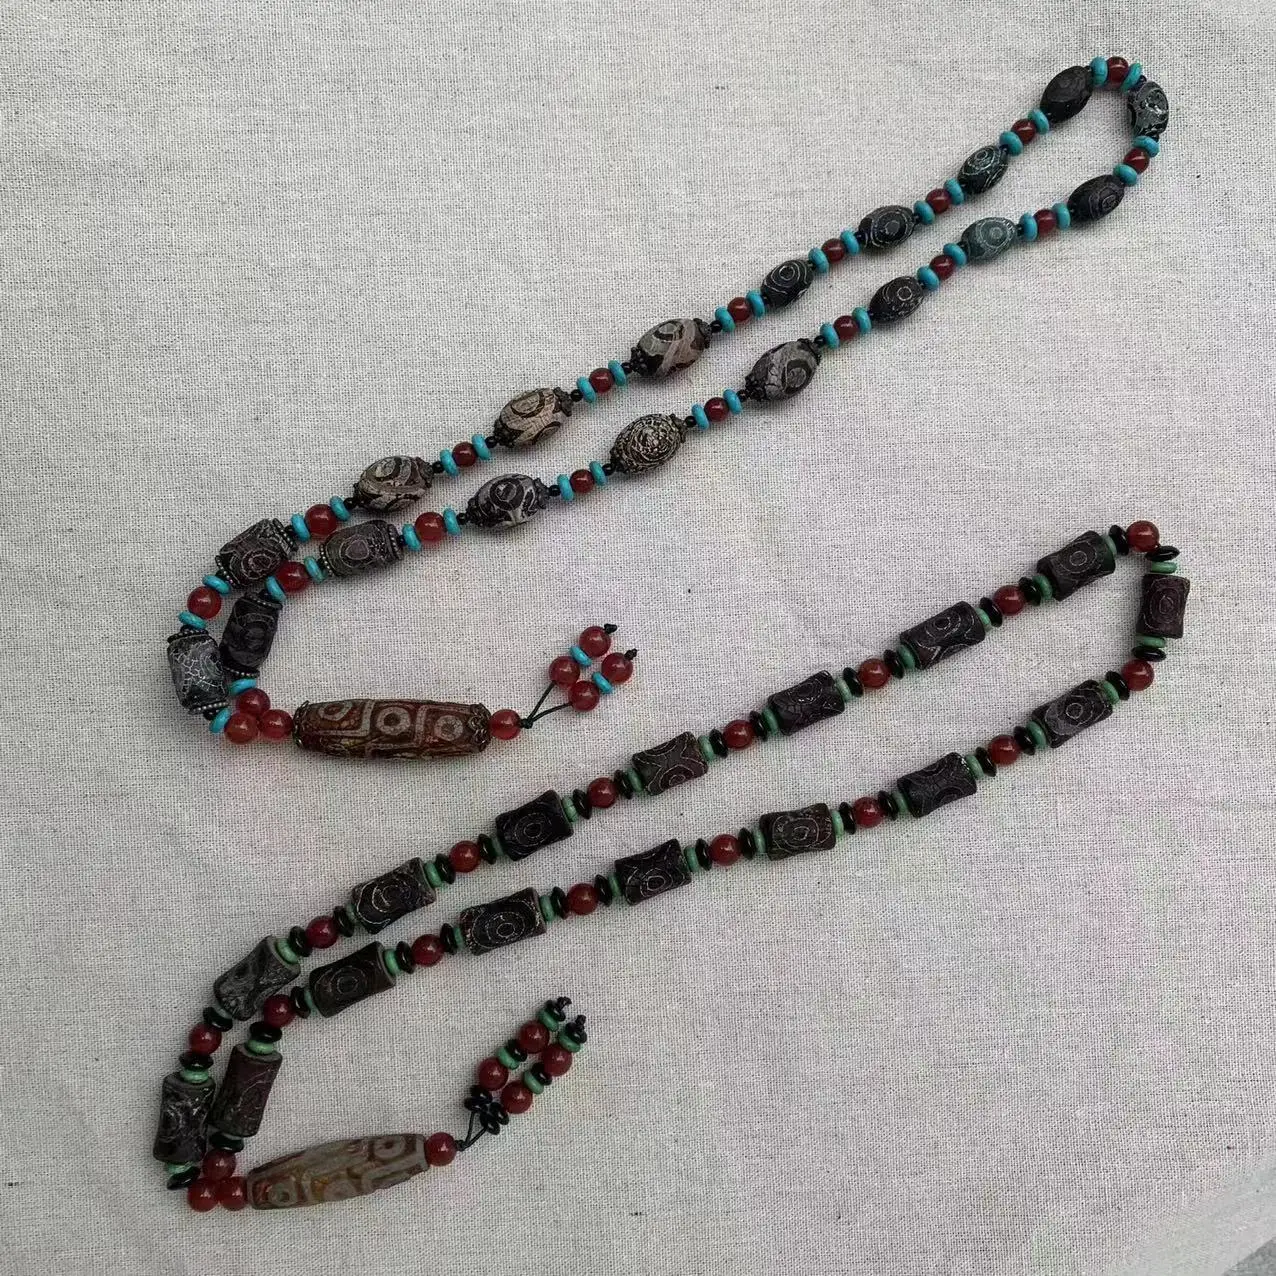 1pcs/lot Natural Rare Precious Millennium Fire Offering Dzi Beads Old Agate Pendant Necklace Amulet folk-custom gem jewelry taki